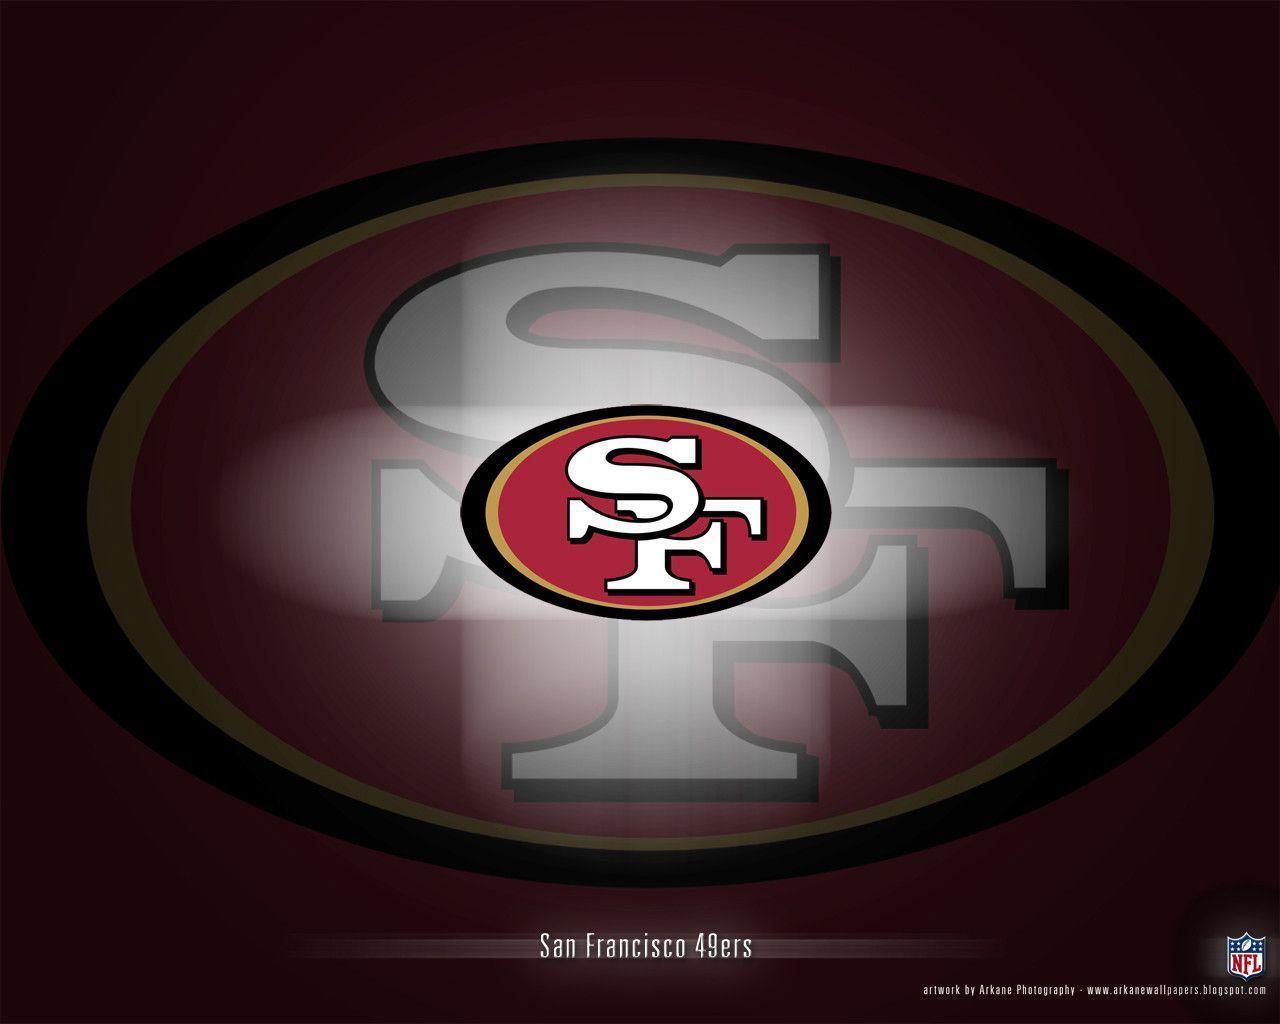 Free San Francisco 49ers desktop wallpaper. San Francisco 49ers